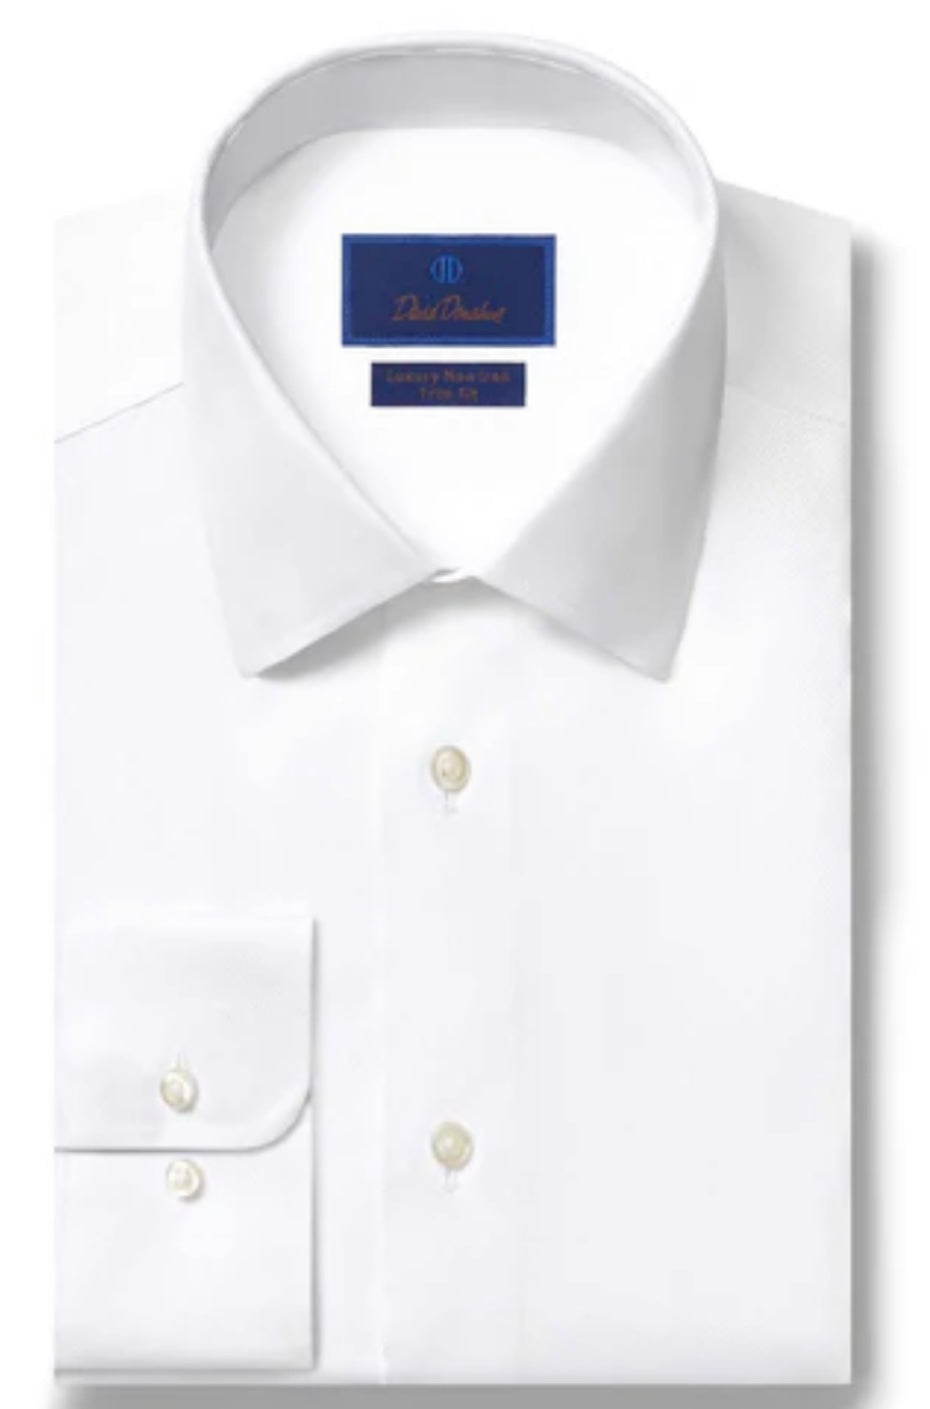 Non-Iron Dress Shirt (White/Trim Fit)